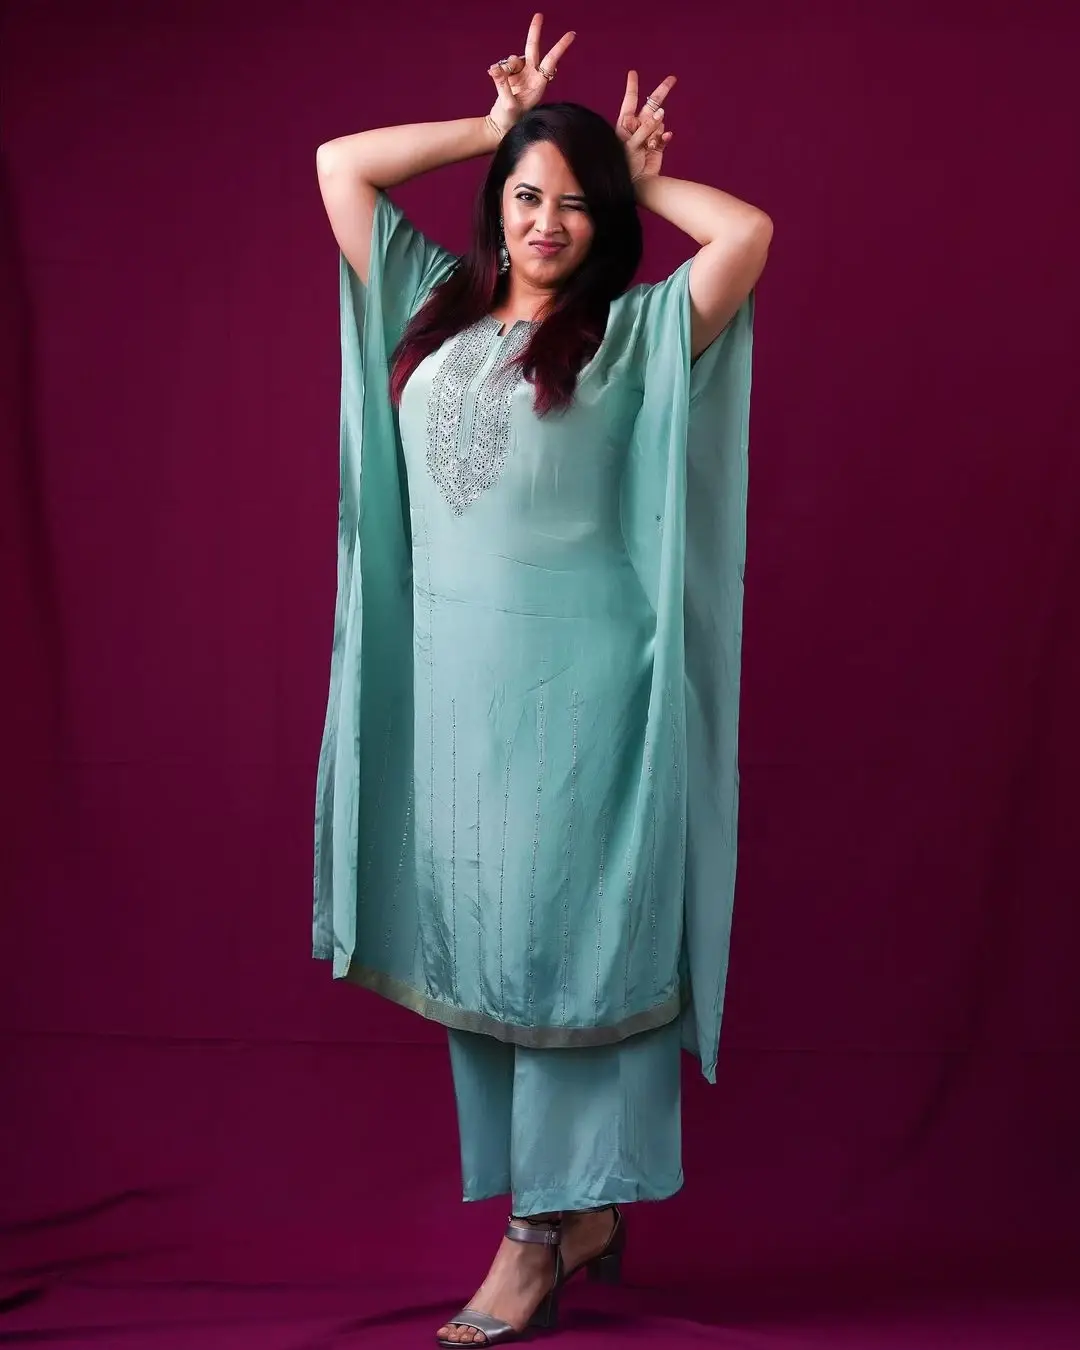 HYDERABAD ACTRESS ANASUYA BHARADWAJ IN BLUE DRESS 3